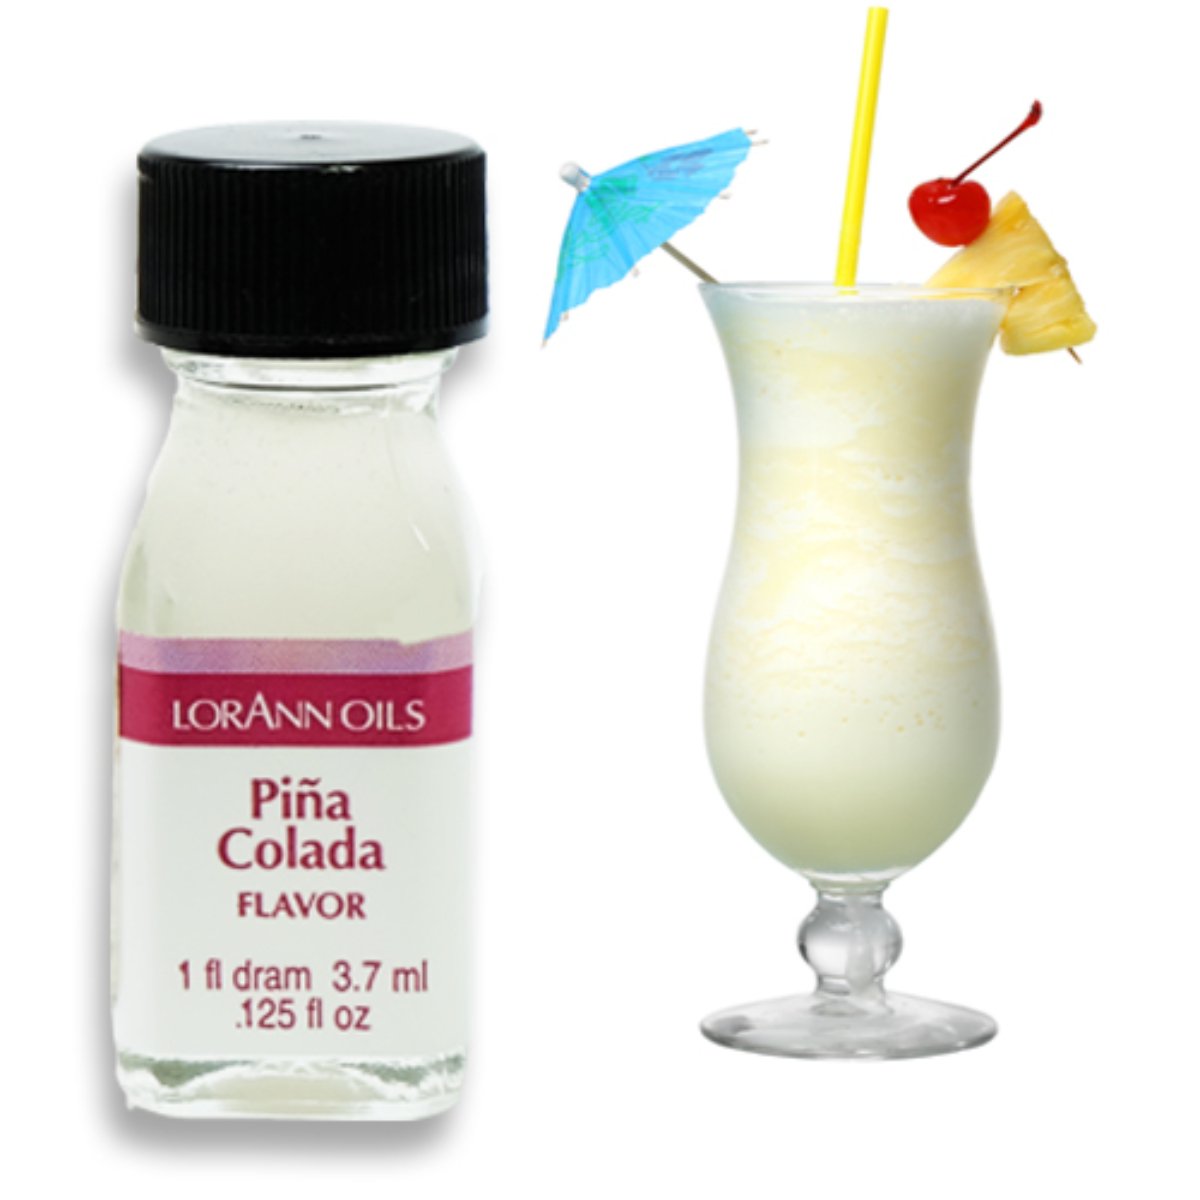 Piña Colada Flavor 1 Dram - Bake Supply Plus